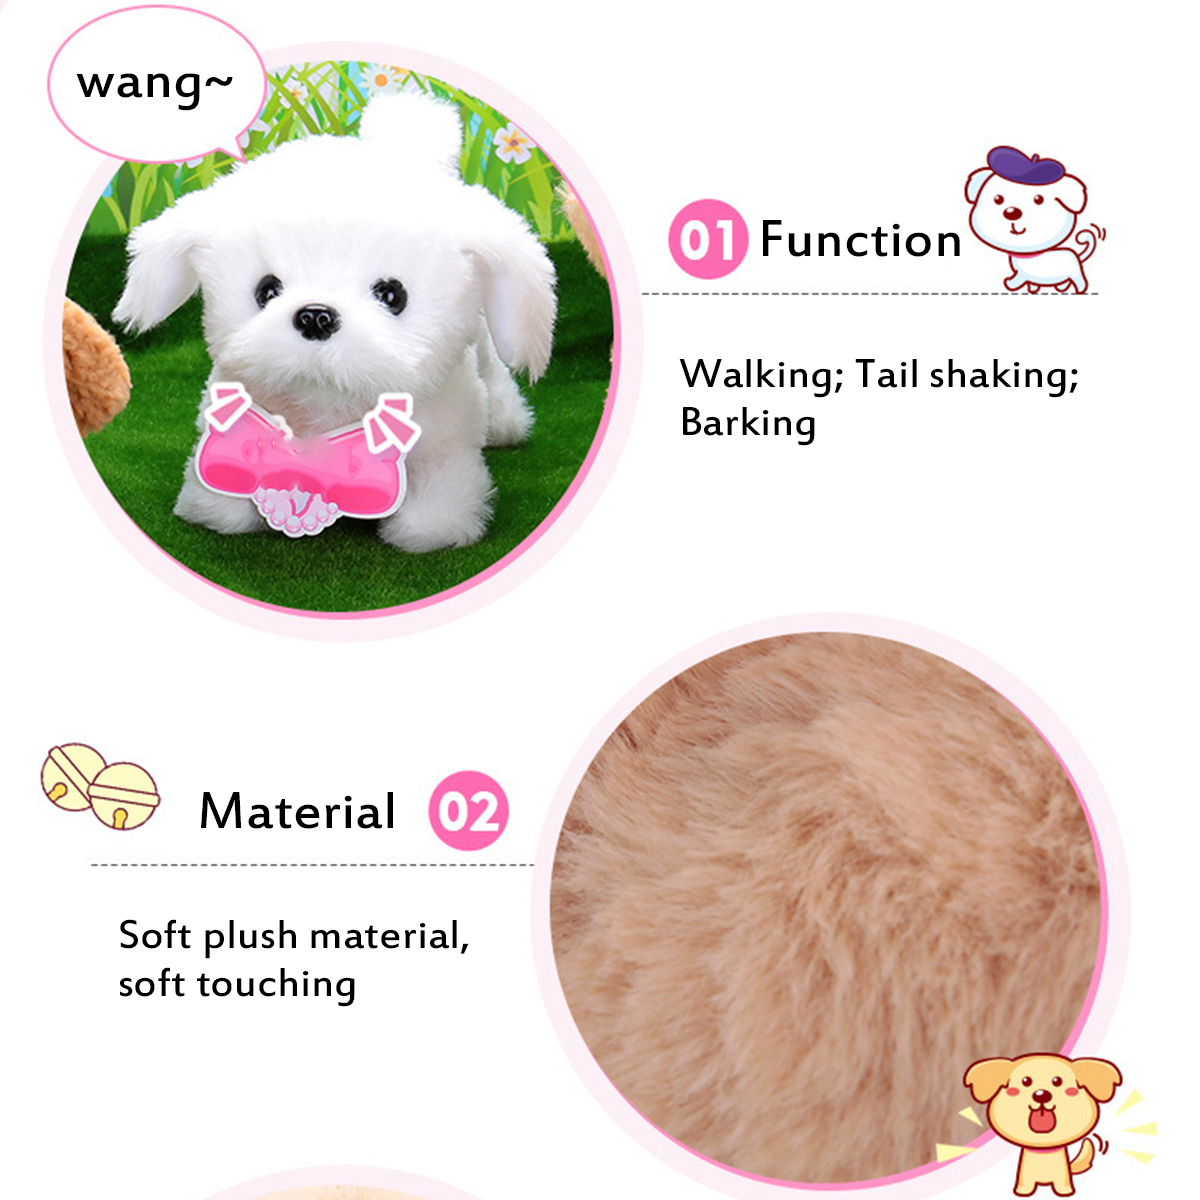 Cute-Electronic-Plush-Stuffed-Walking-Tail-Shaking-Barking-Pet-Dog-Toy-for-Kids-Developmental-1707046-9